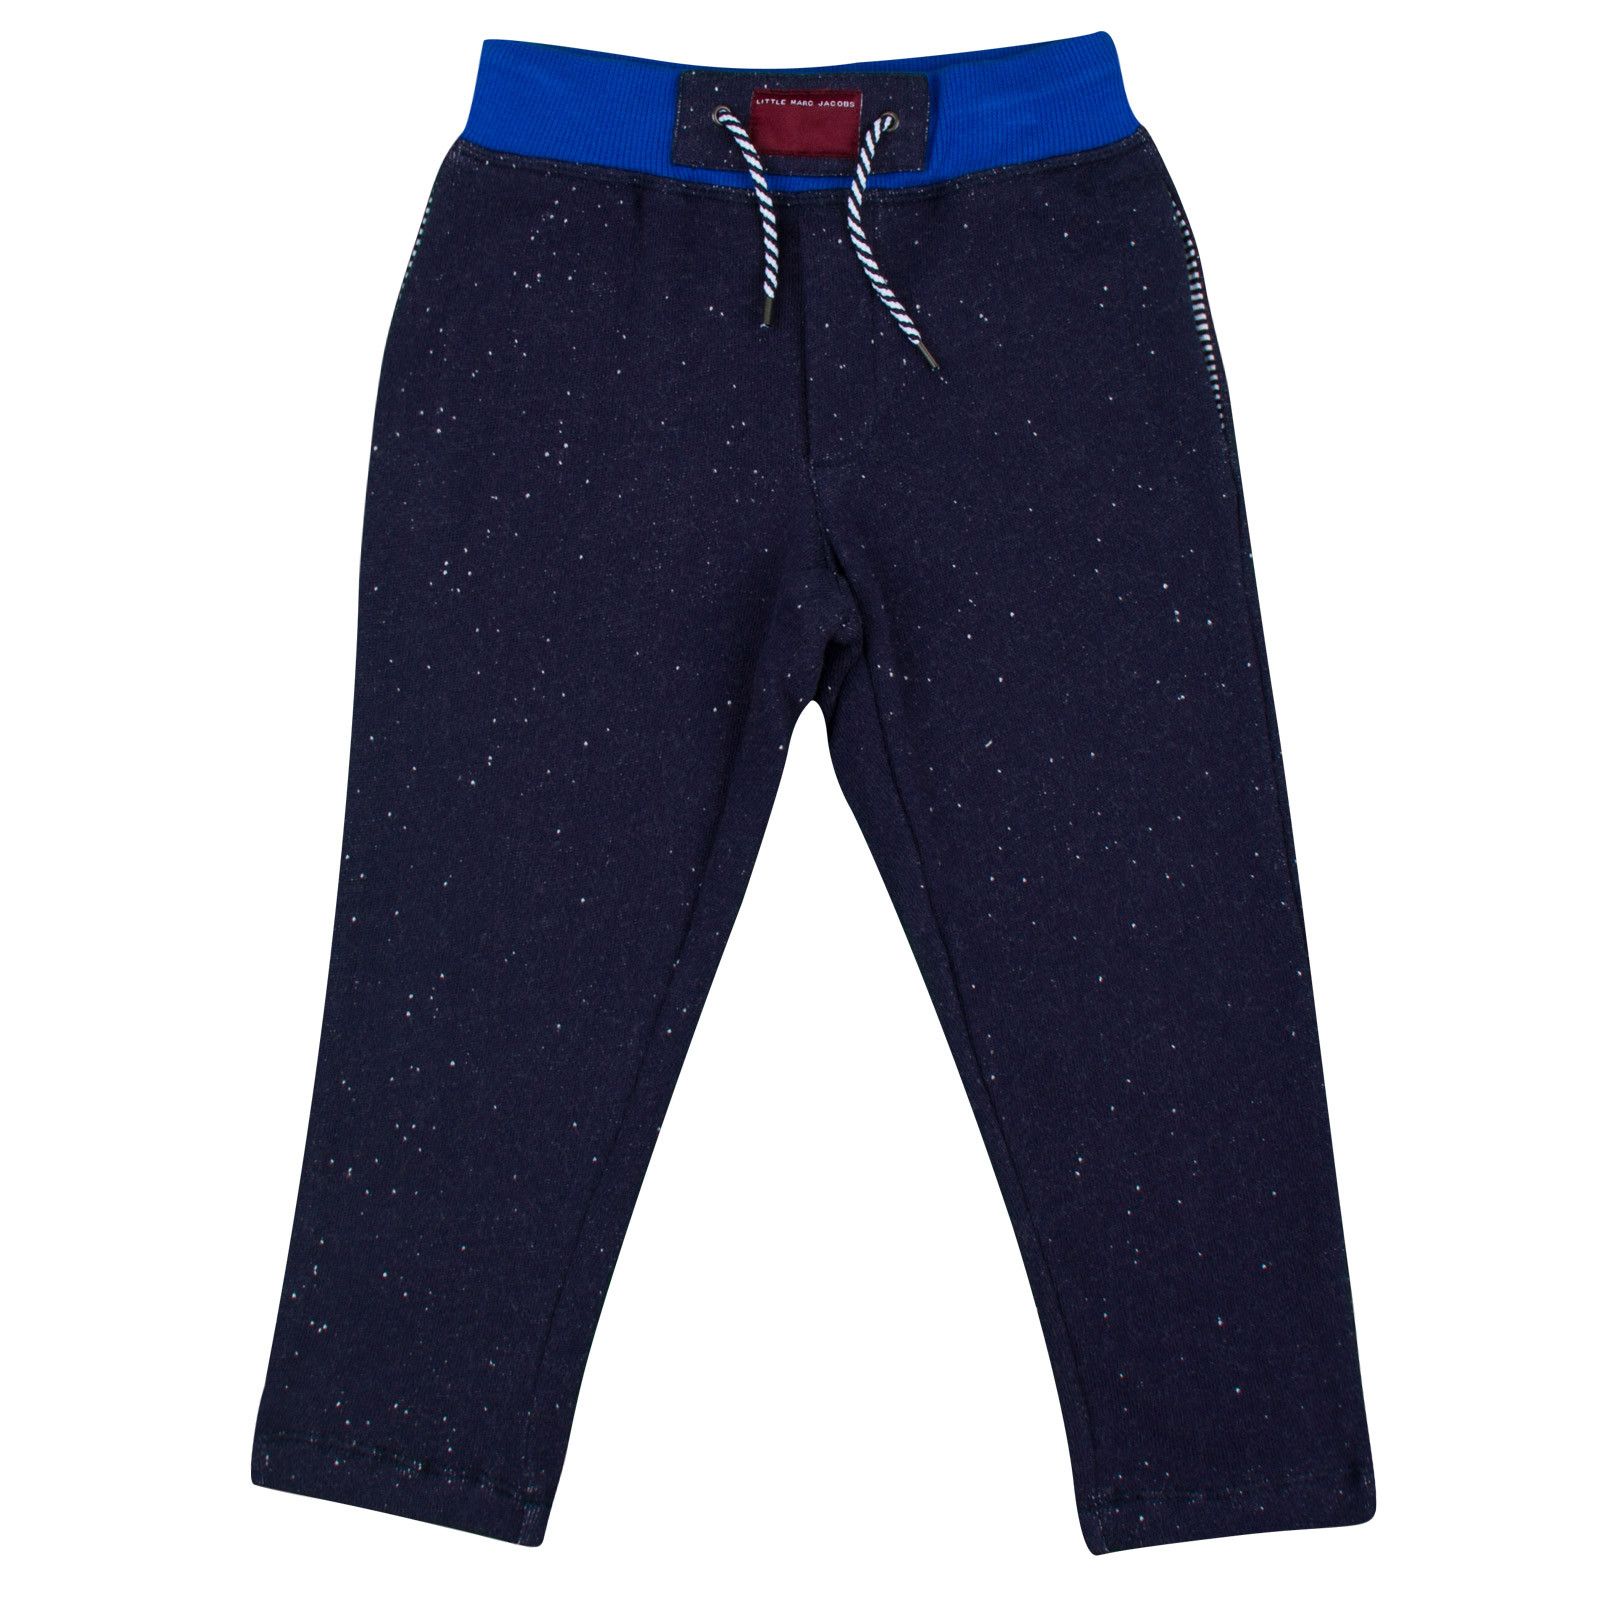 Boys Navy Blue Cotton Jersey Trousers - CÉMAROSE | Children's Fashion Store - 1